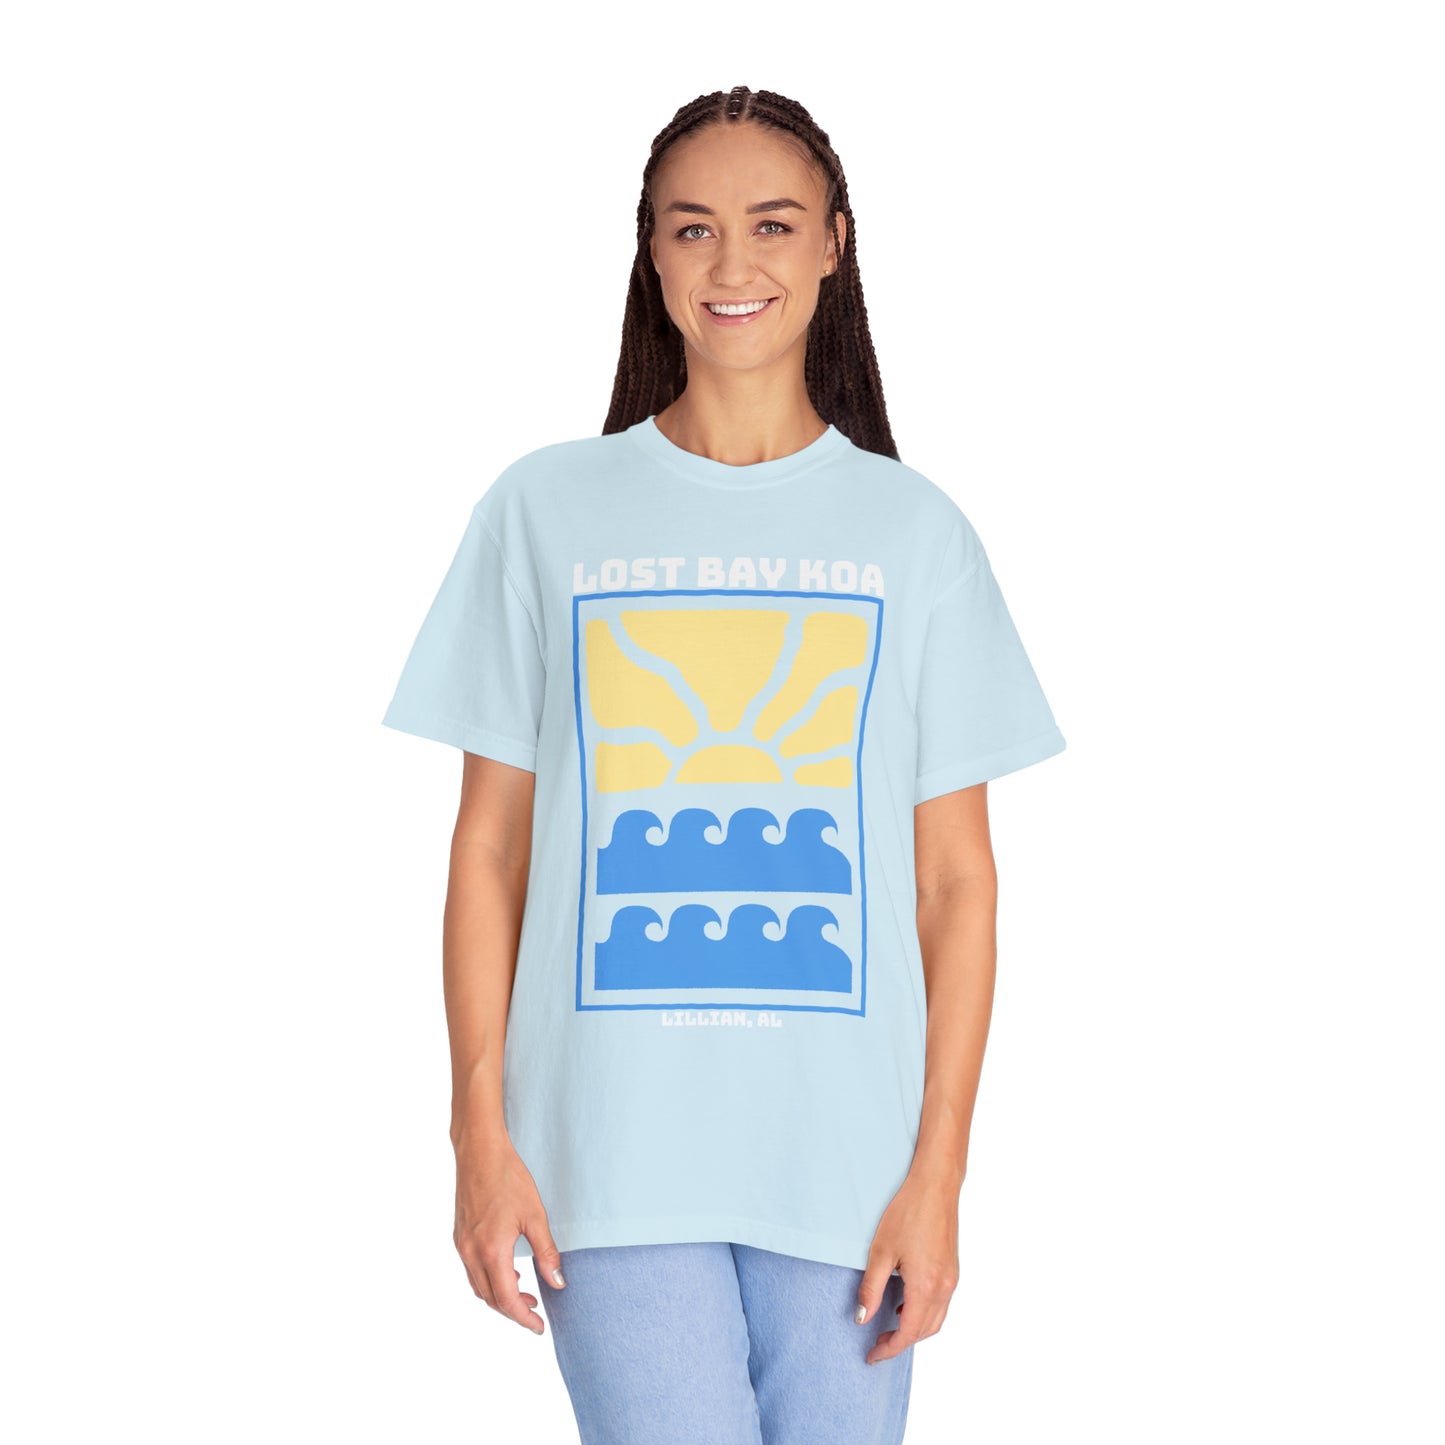 Lost Bay KOA- Unisex Garment-Dyed T-shirt